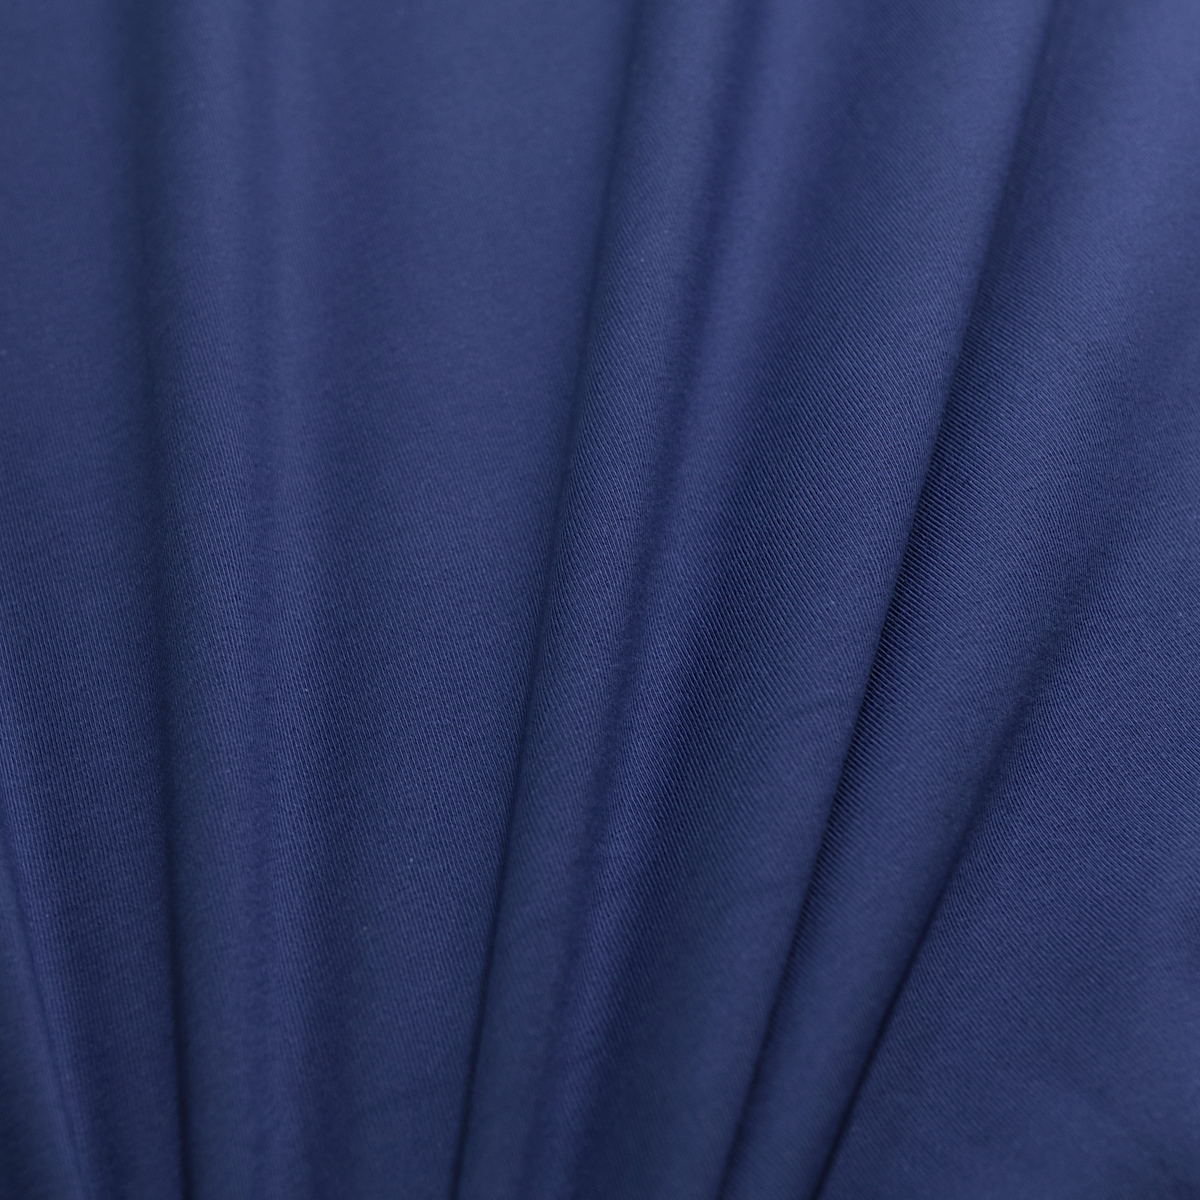 Robuster elastischer Polyester Jersey in Blau Meterware als Bekleidungsstoff